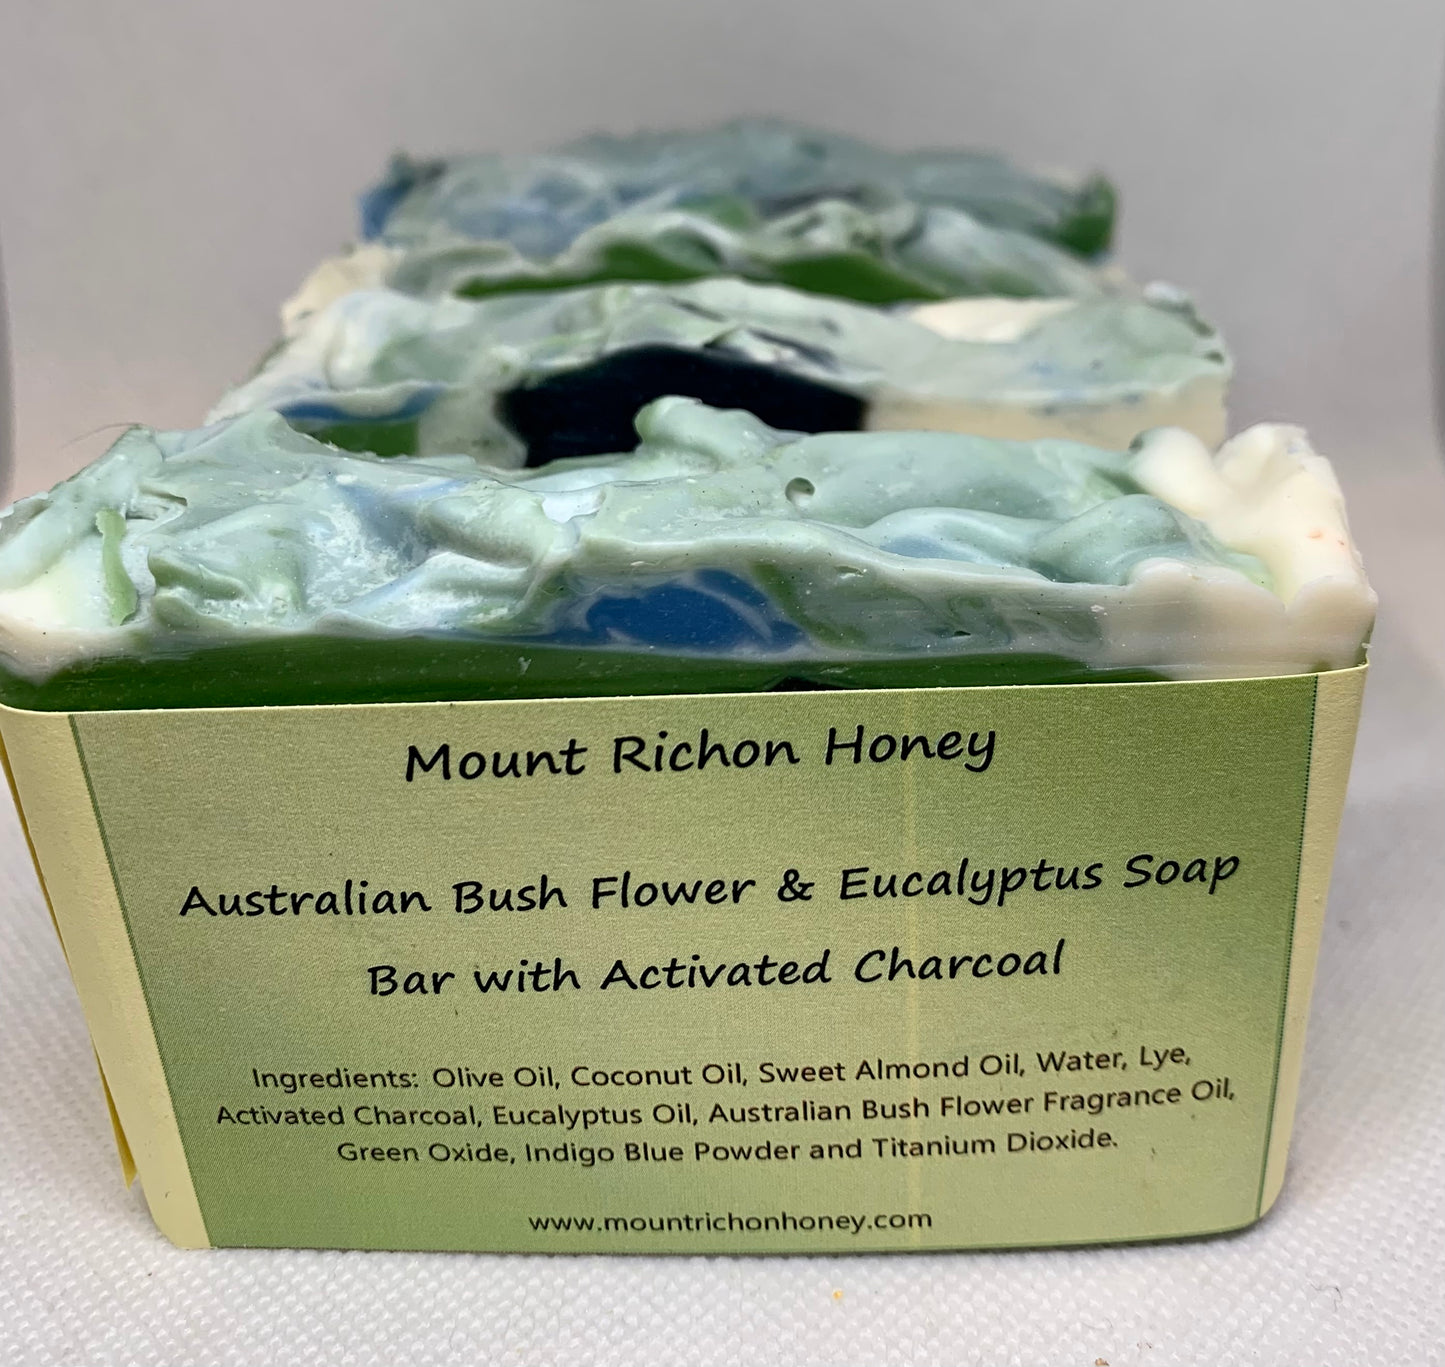 Australian Bush Flower & Eucalyptus Soap Bar with Activated Charcoal